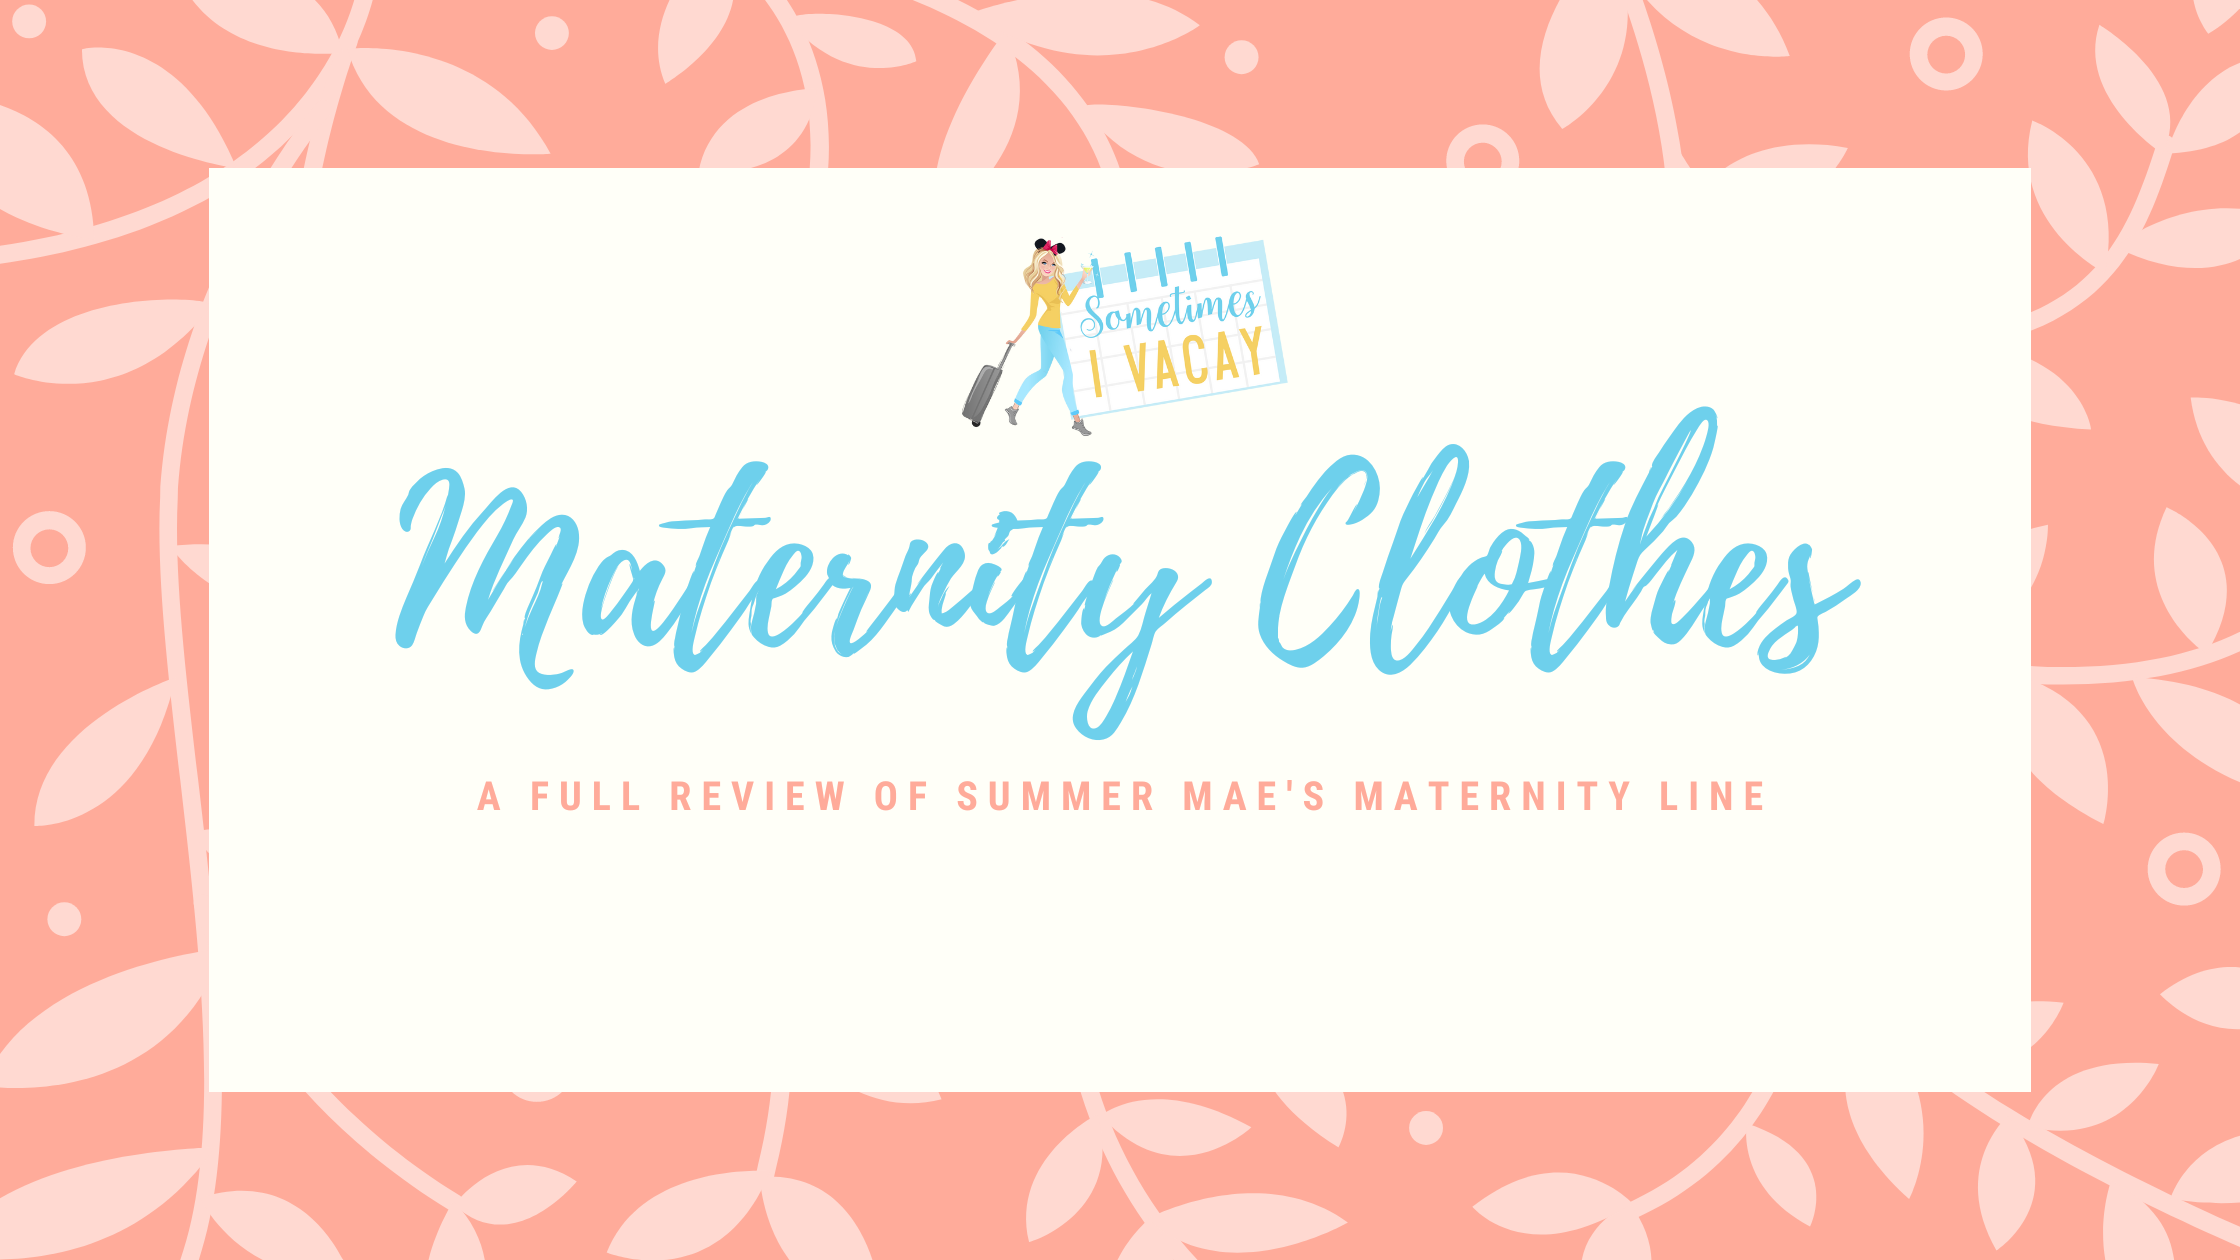 My Summer Wardrobe — The Closet Journal